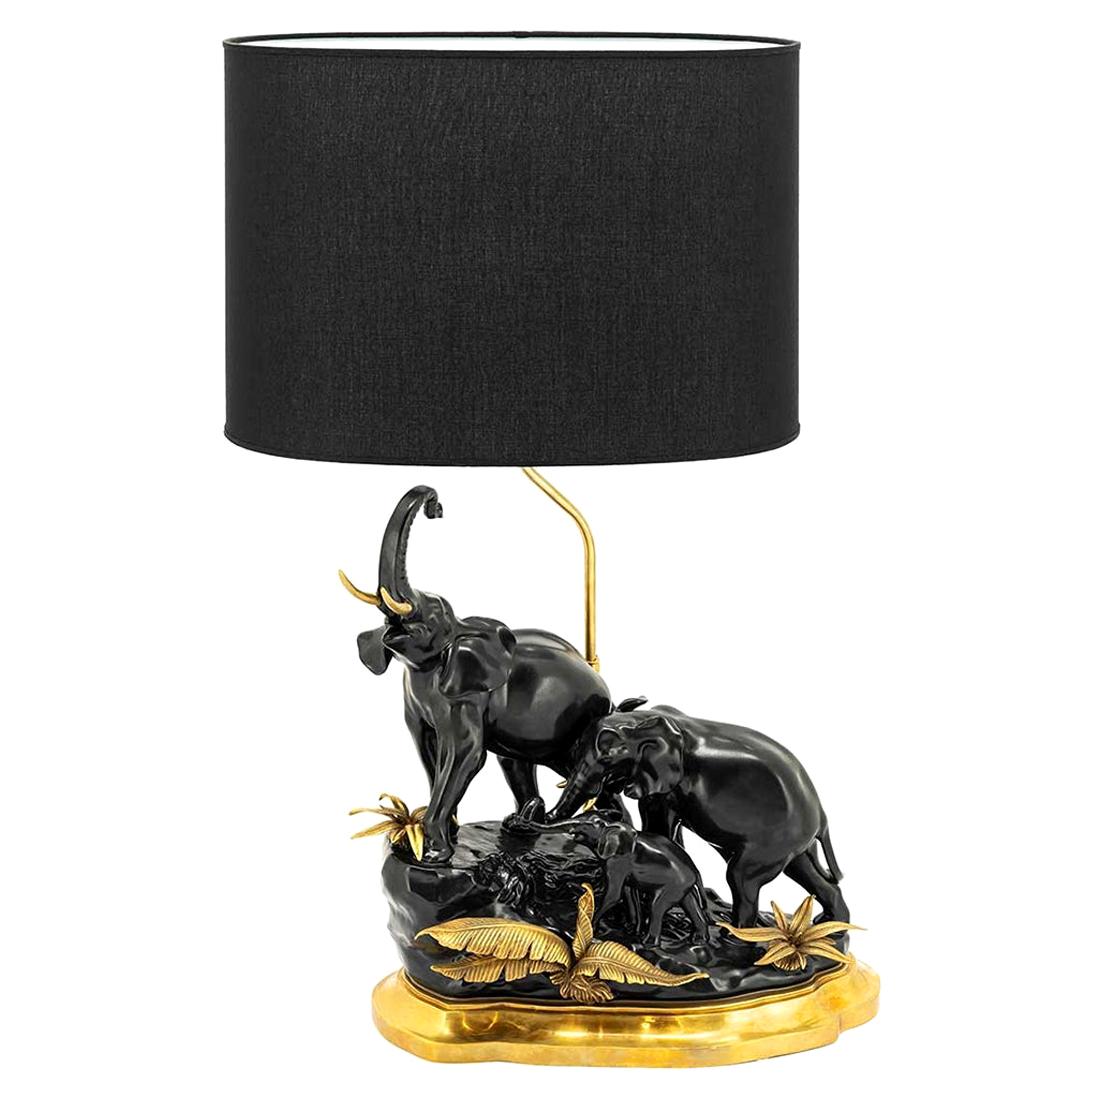 Black Elephants Table Lamp